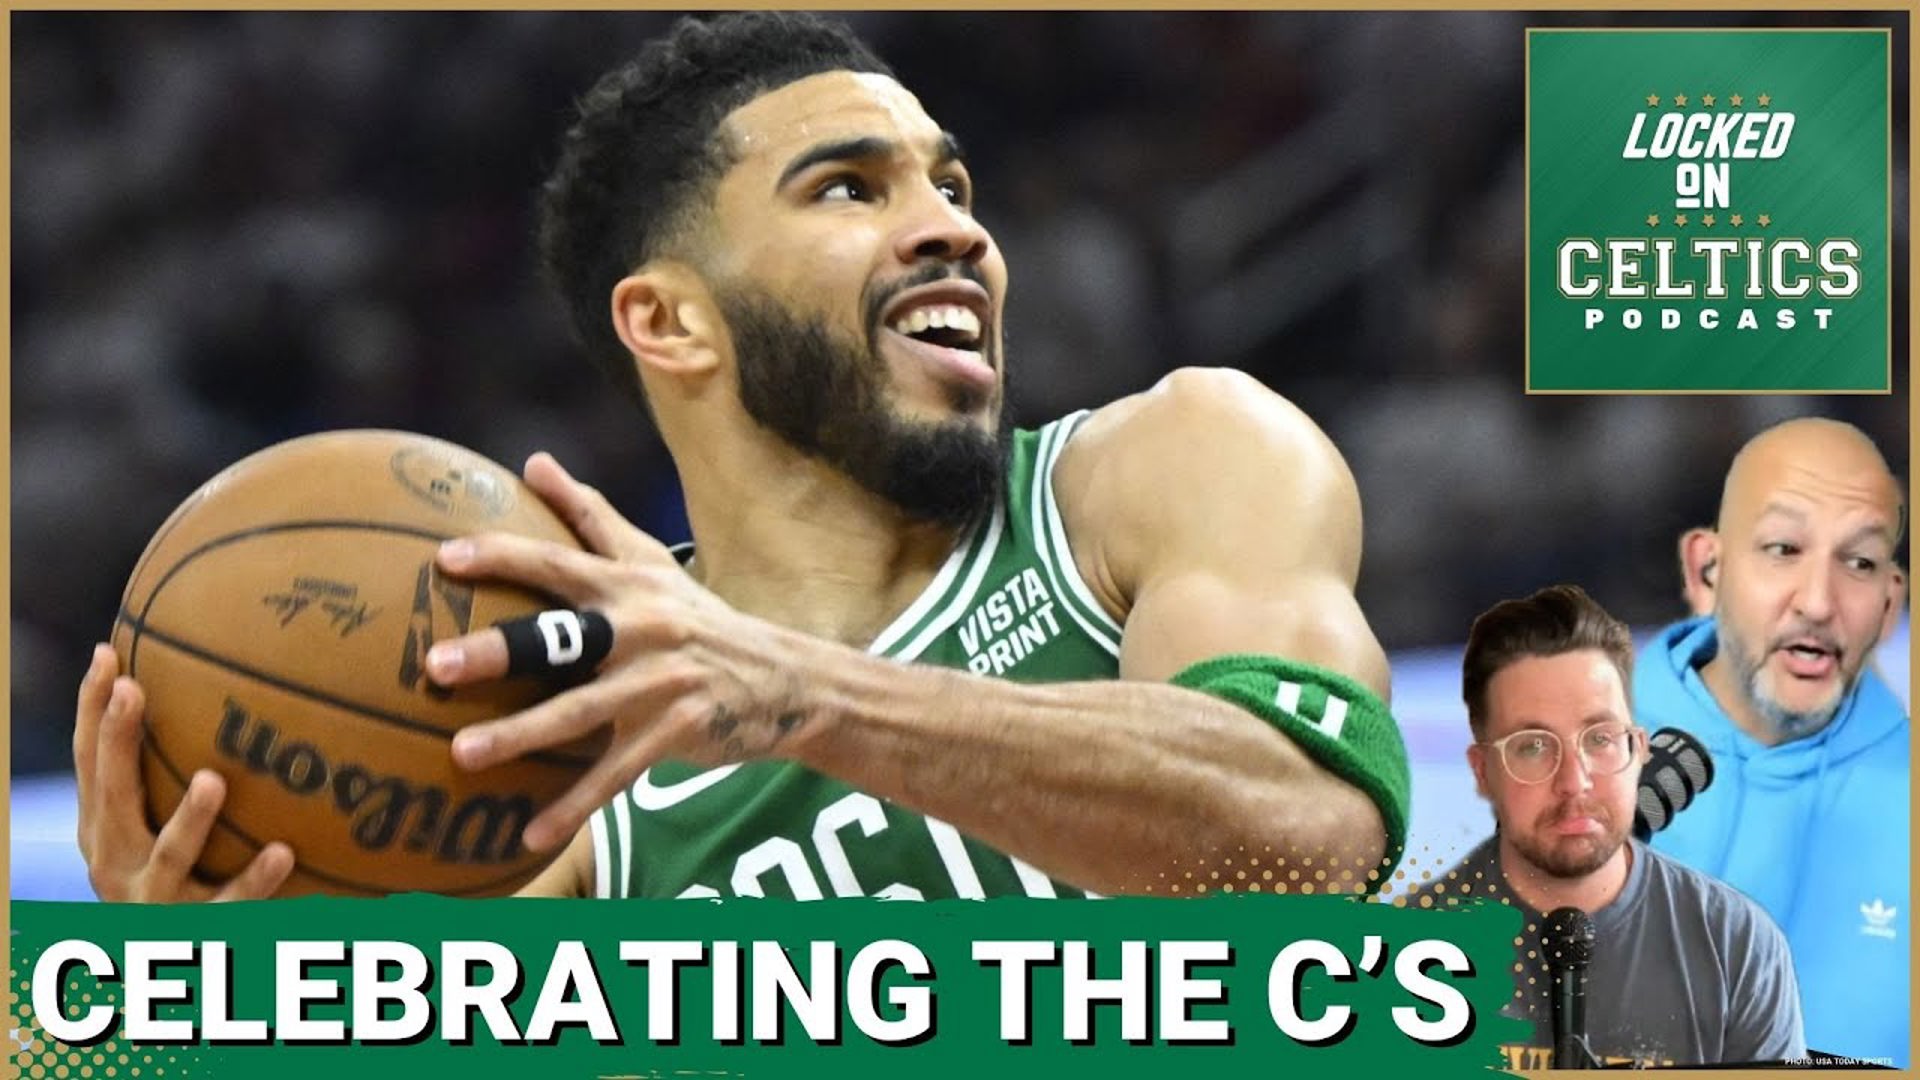 Celebrating Boston Celtics halfway to their NBA championship goal